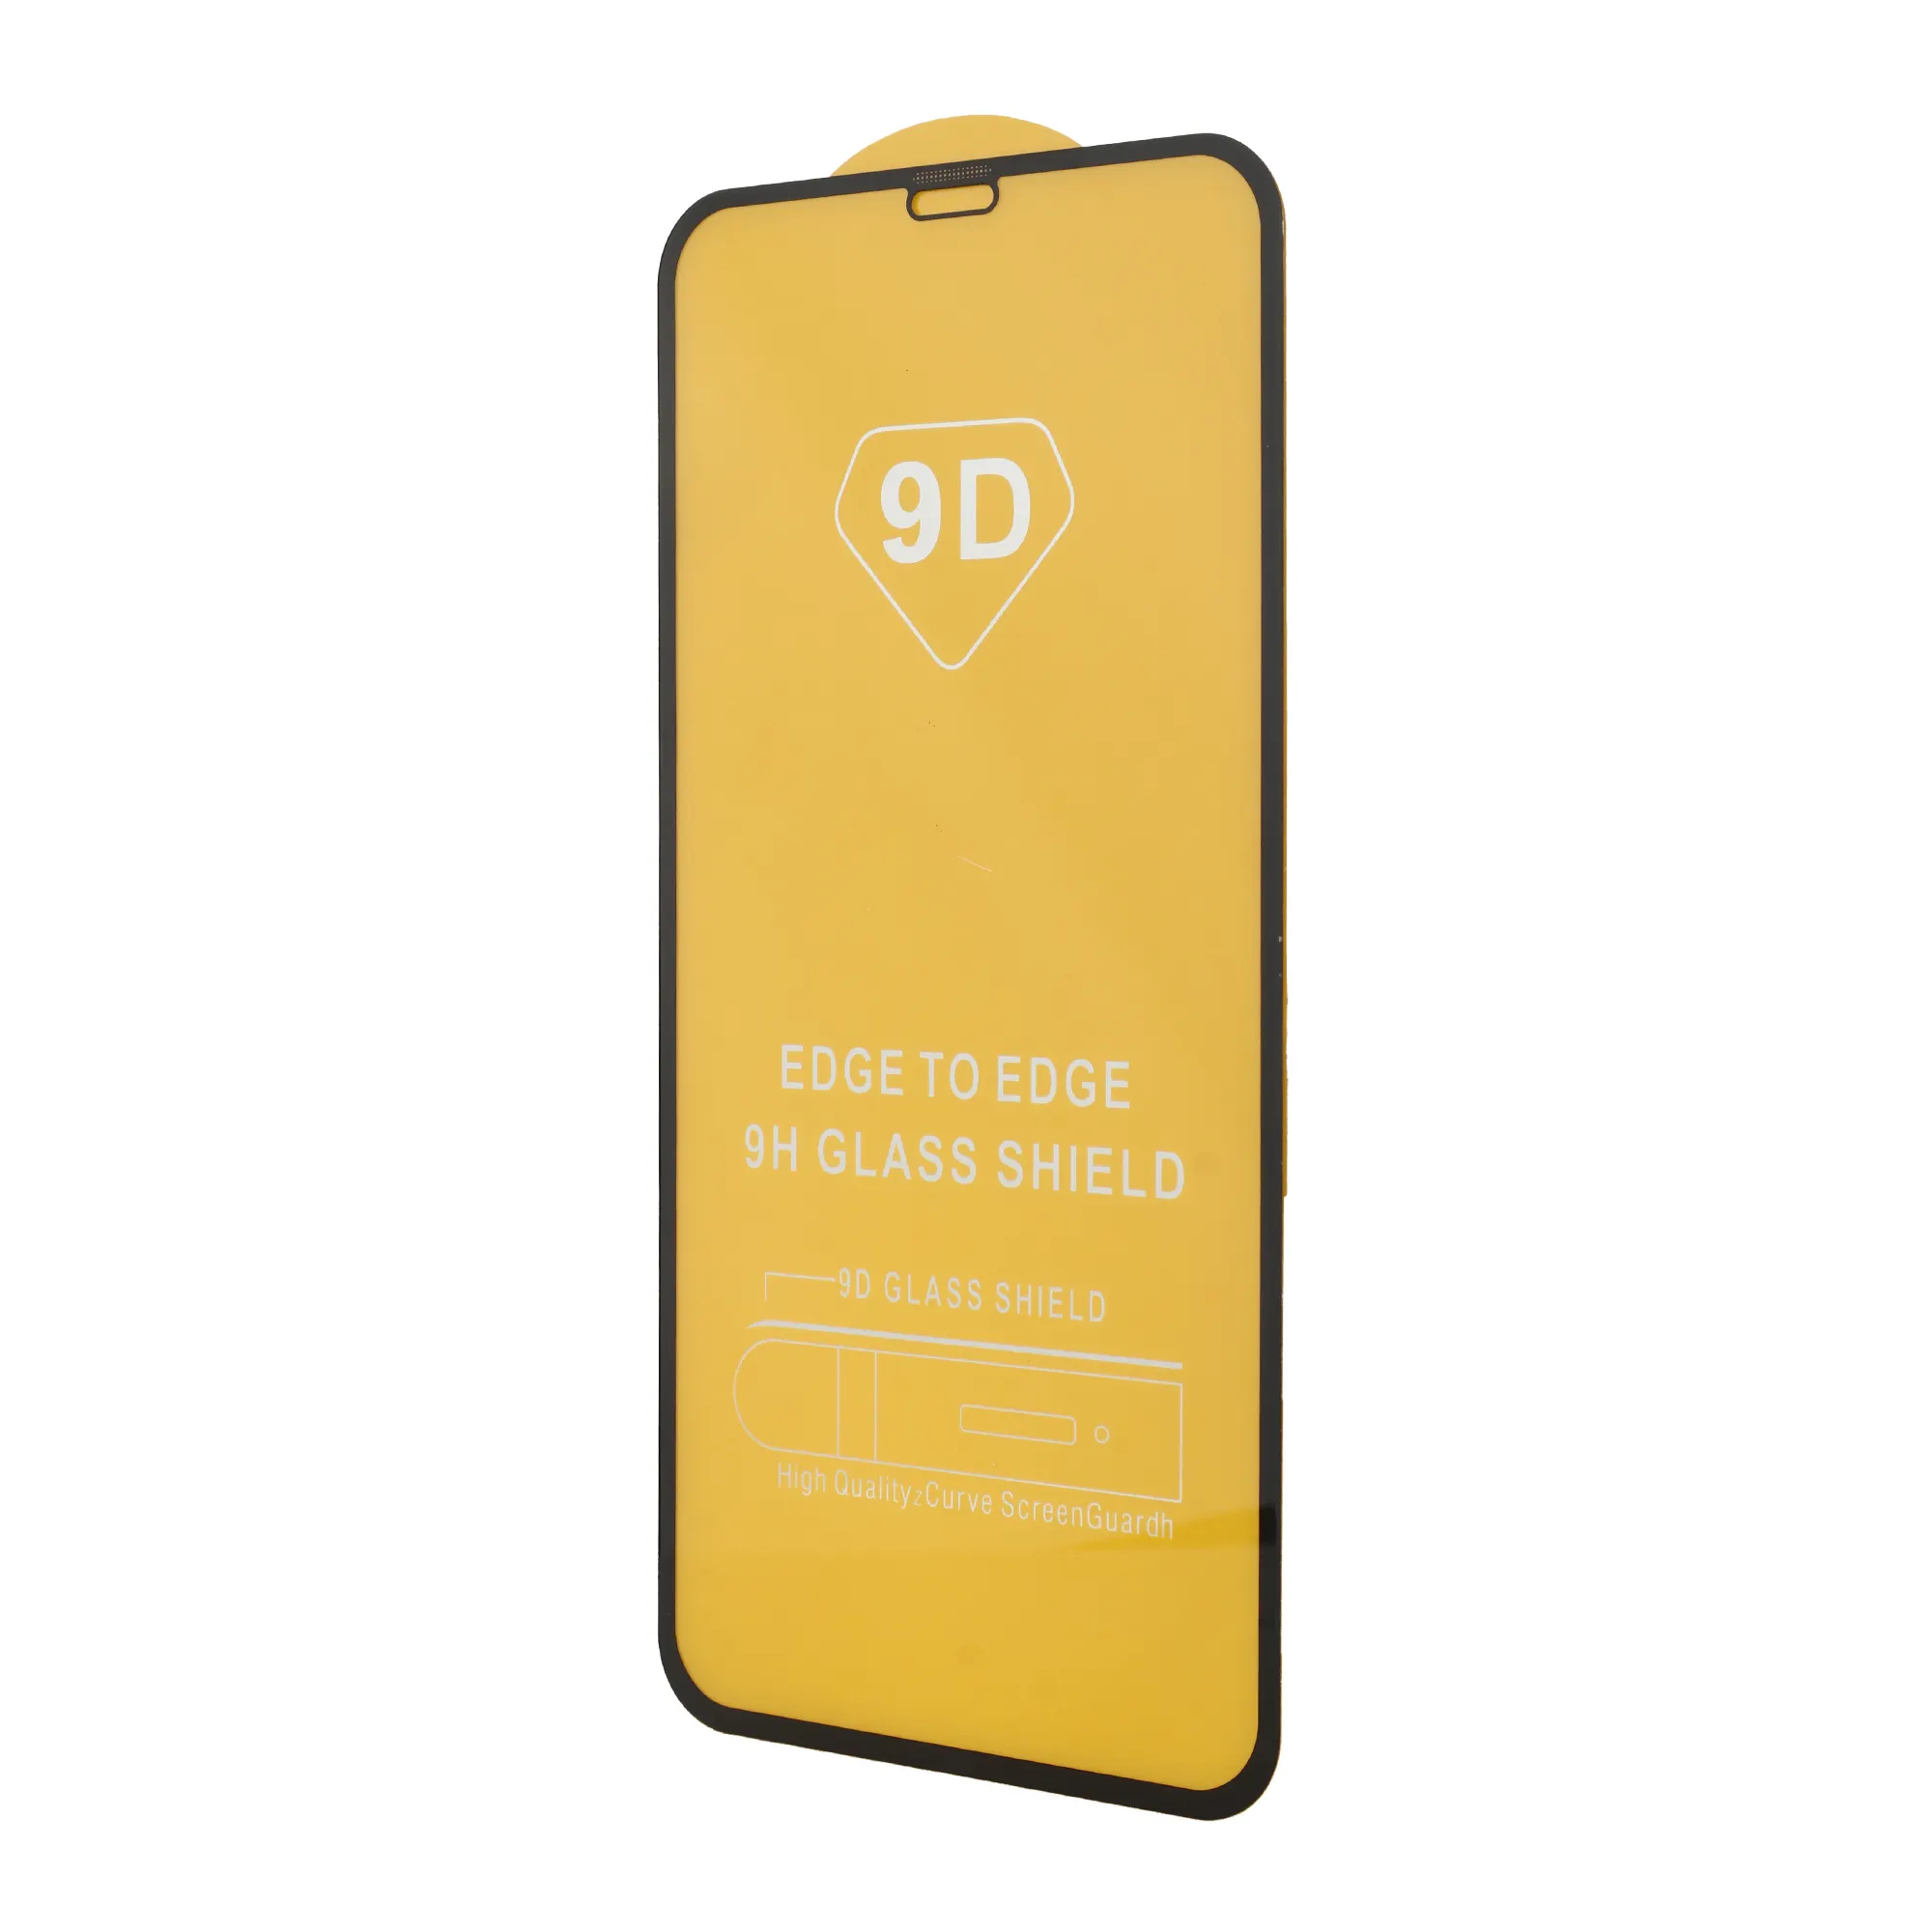 [Somostel Mica de Vidrio]9D 99.5% High Transparency Tempered Glass Screen Protector, Micas 9D de Vidrio Templado